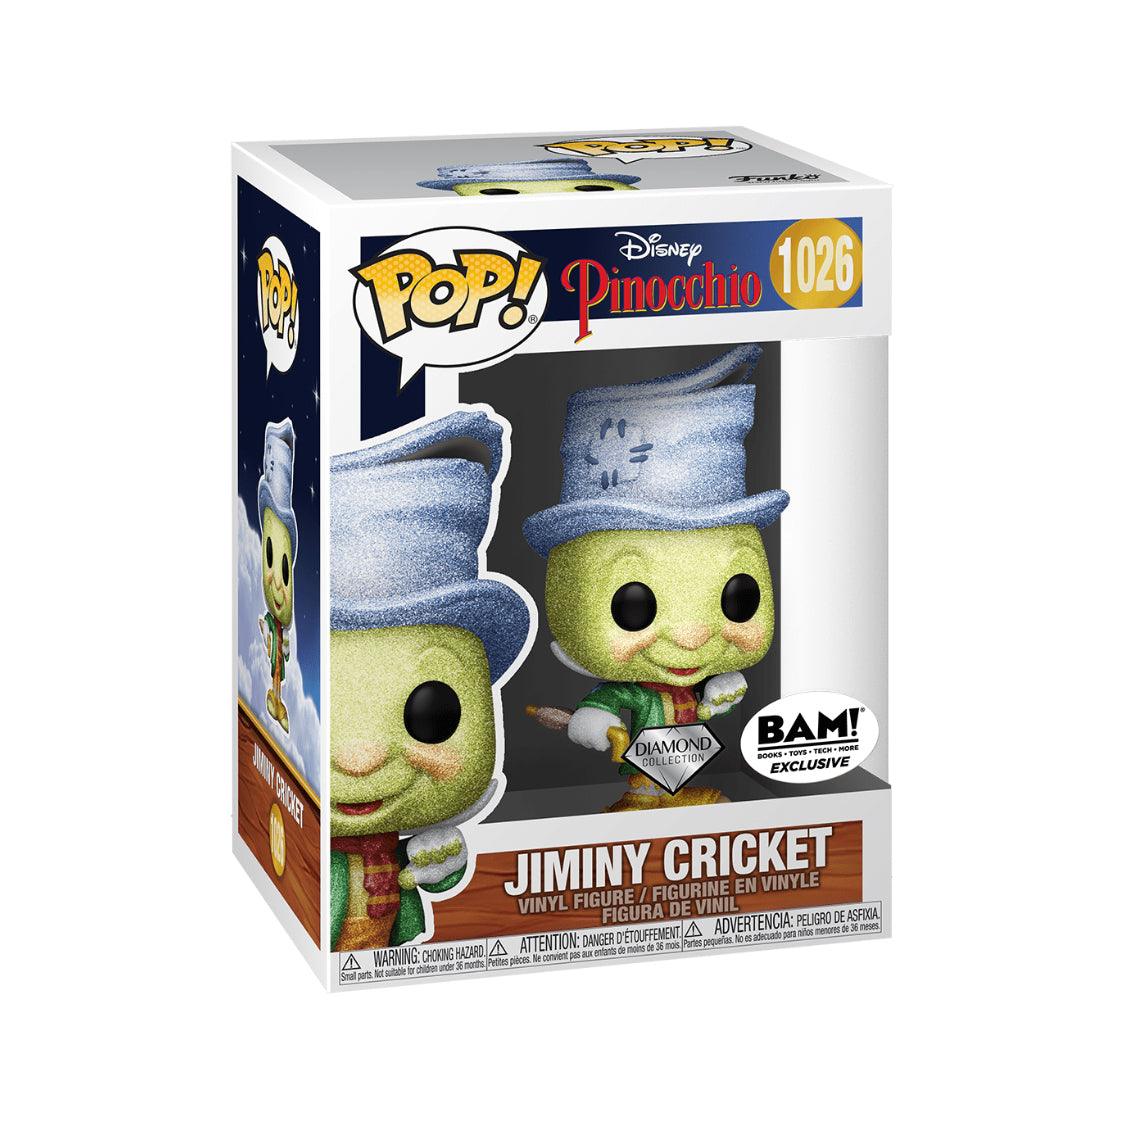 Pop! Disney - Pinocchio - Jiminy Cricket - #1026 - DIAMOND Collection BAM! EXCLUSIVE - Hobby Champion Inc